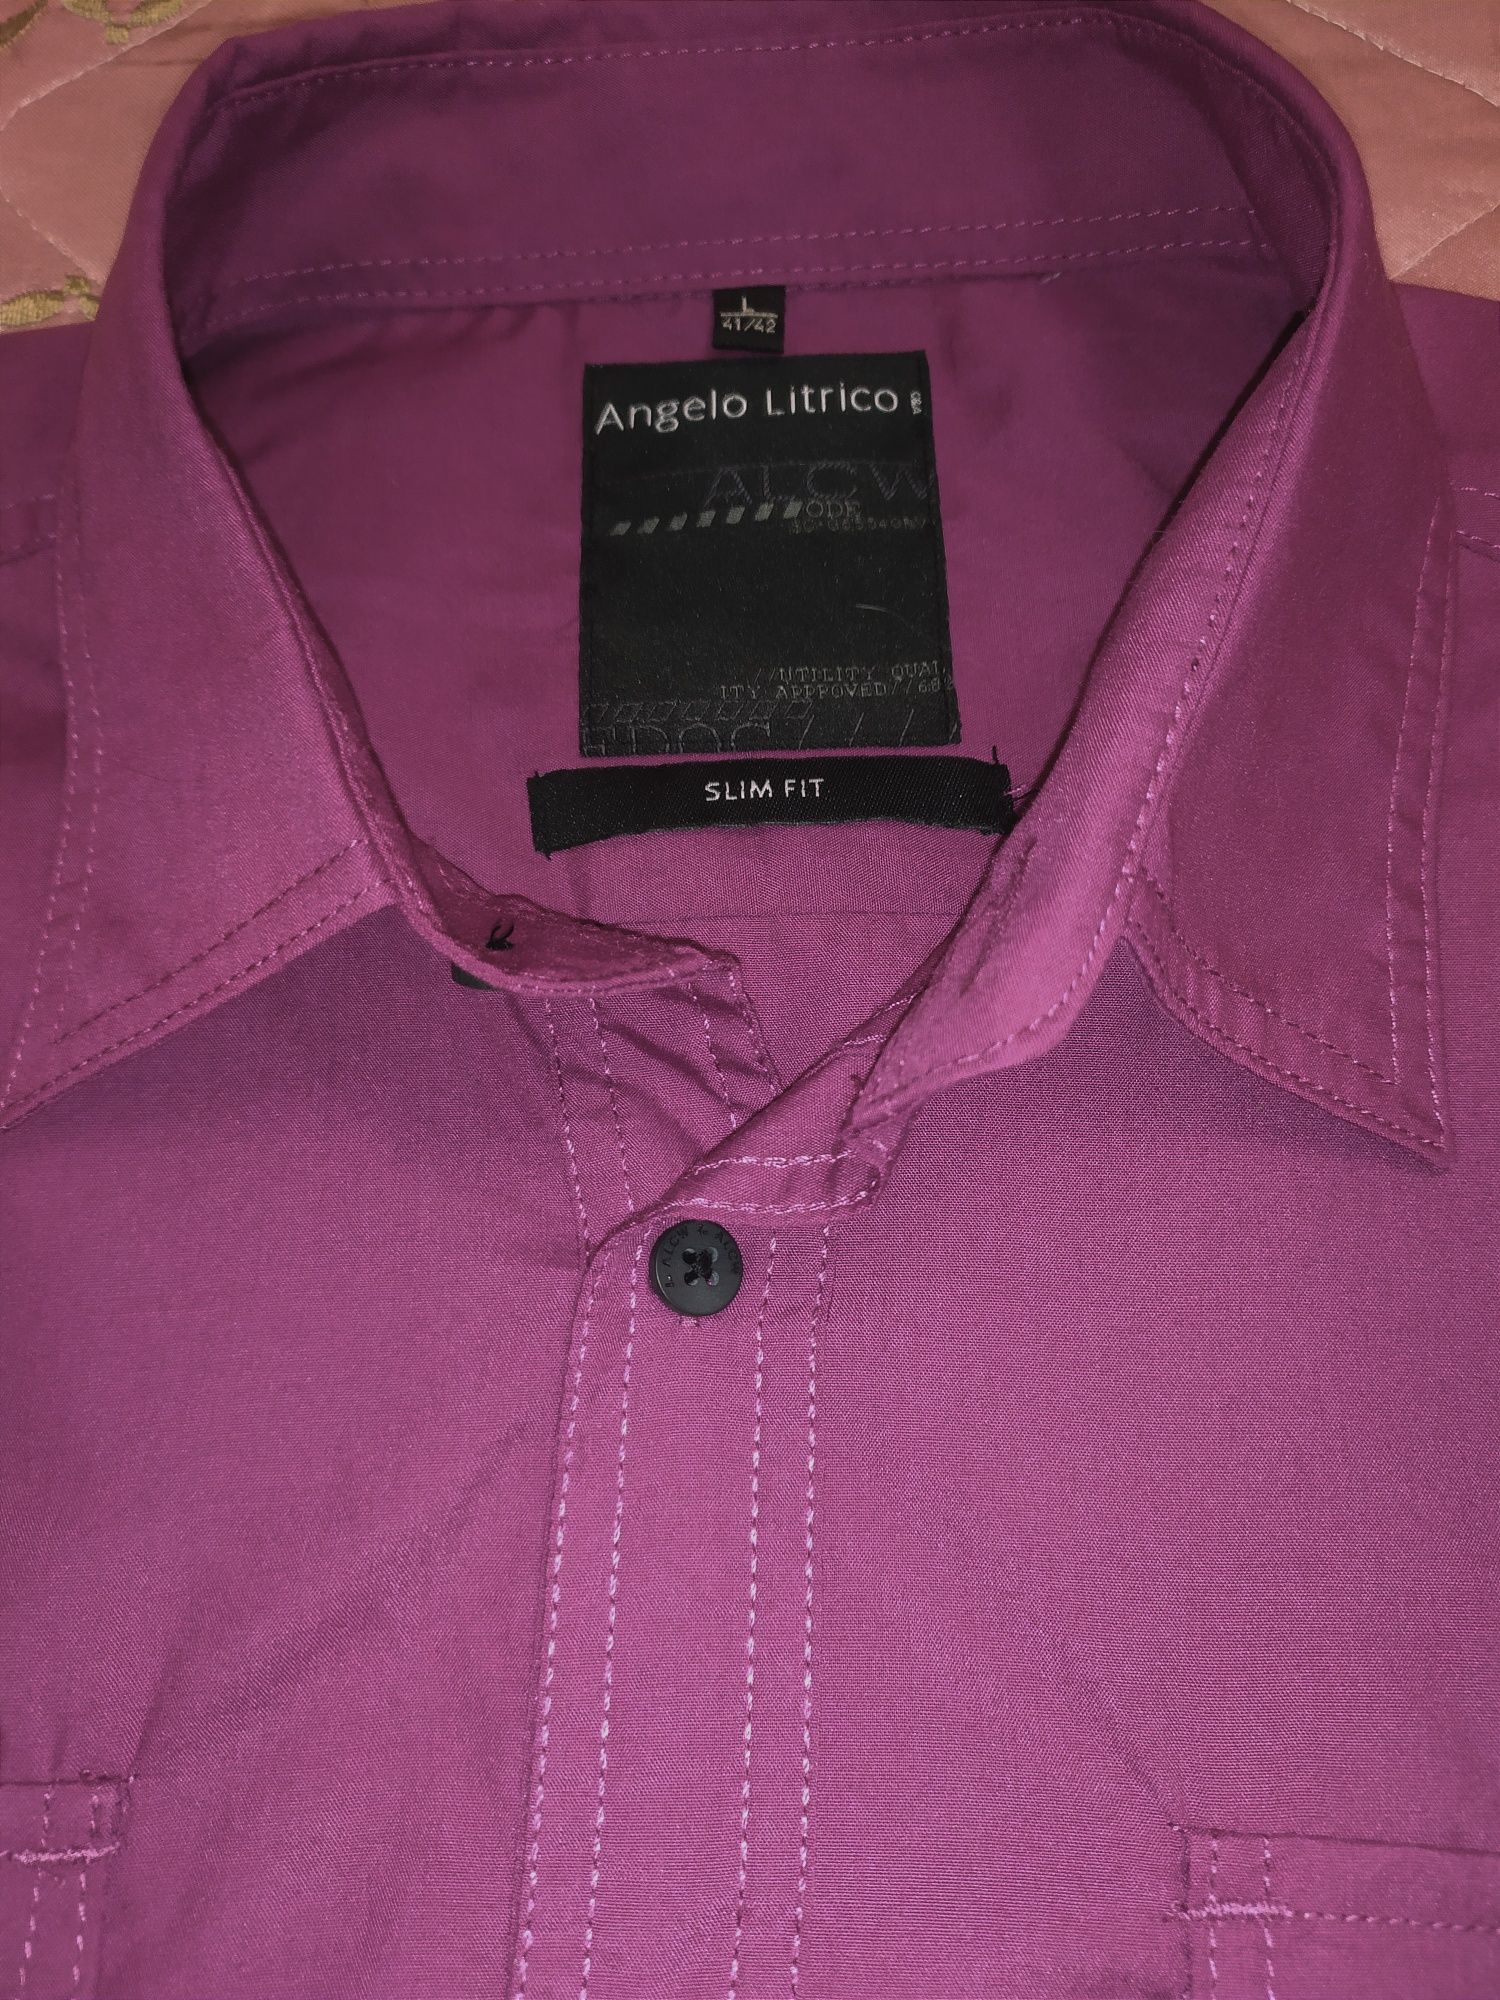 Мужская рубашка Angelo Litrico р.48-50, шведка, легкая